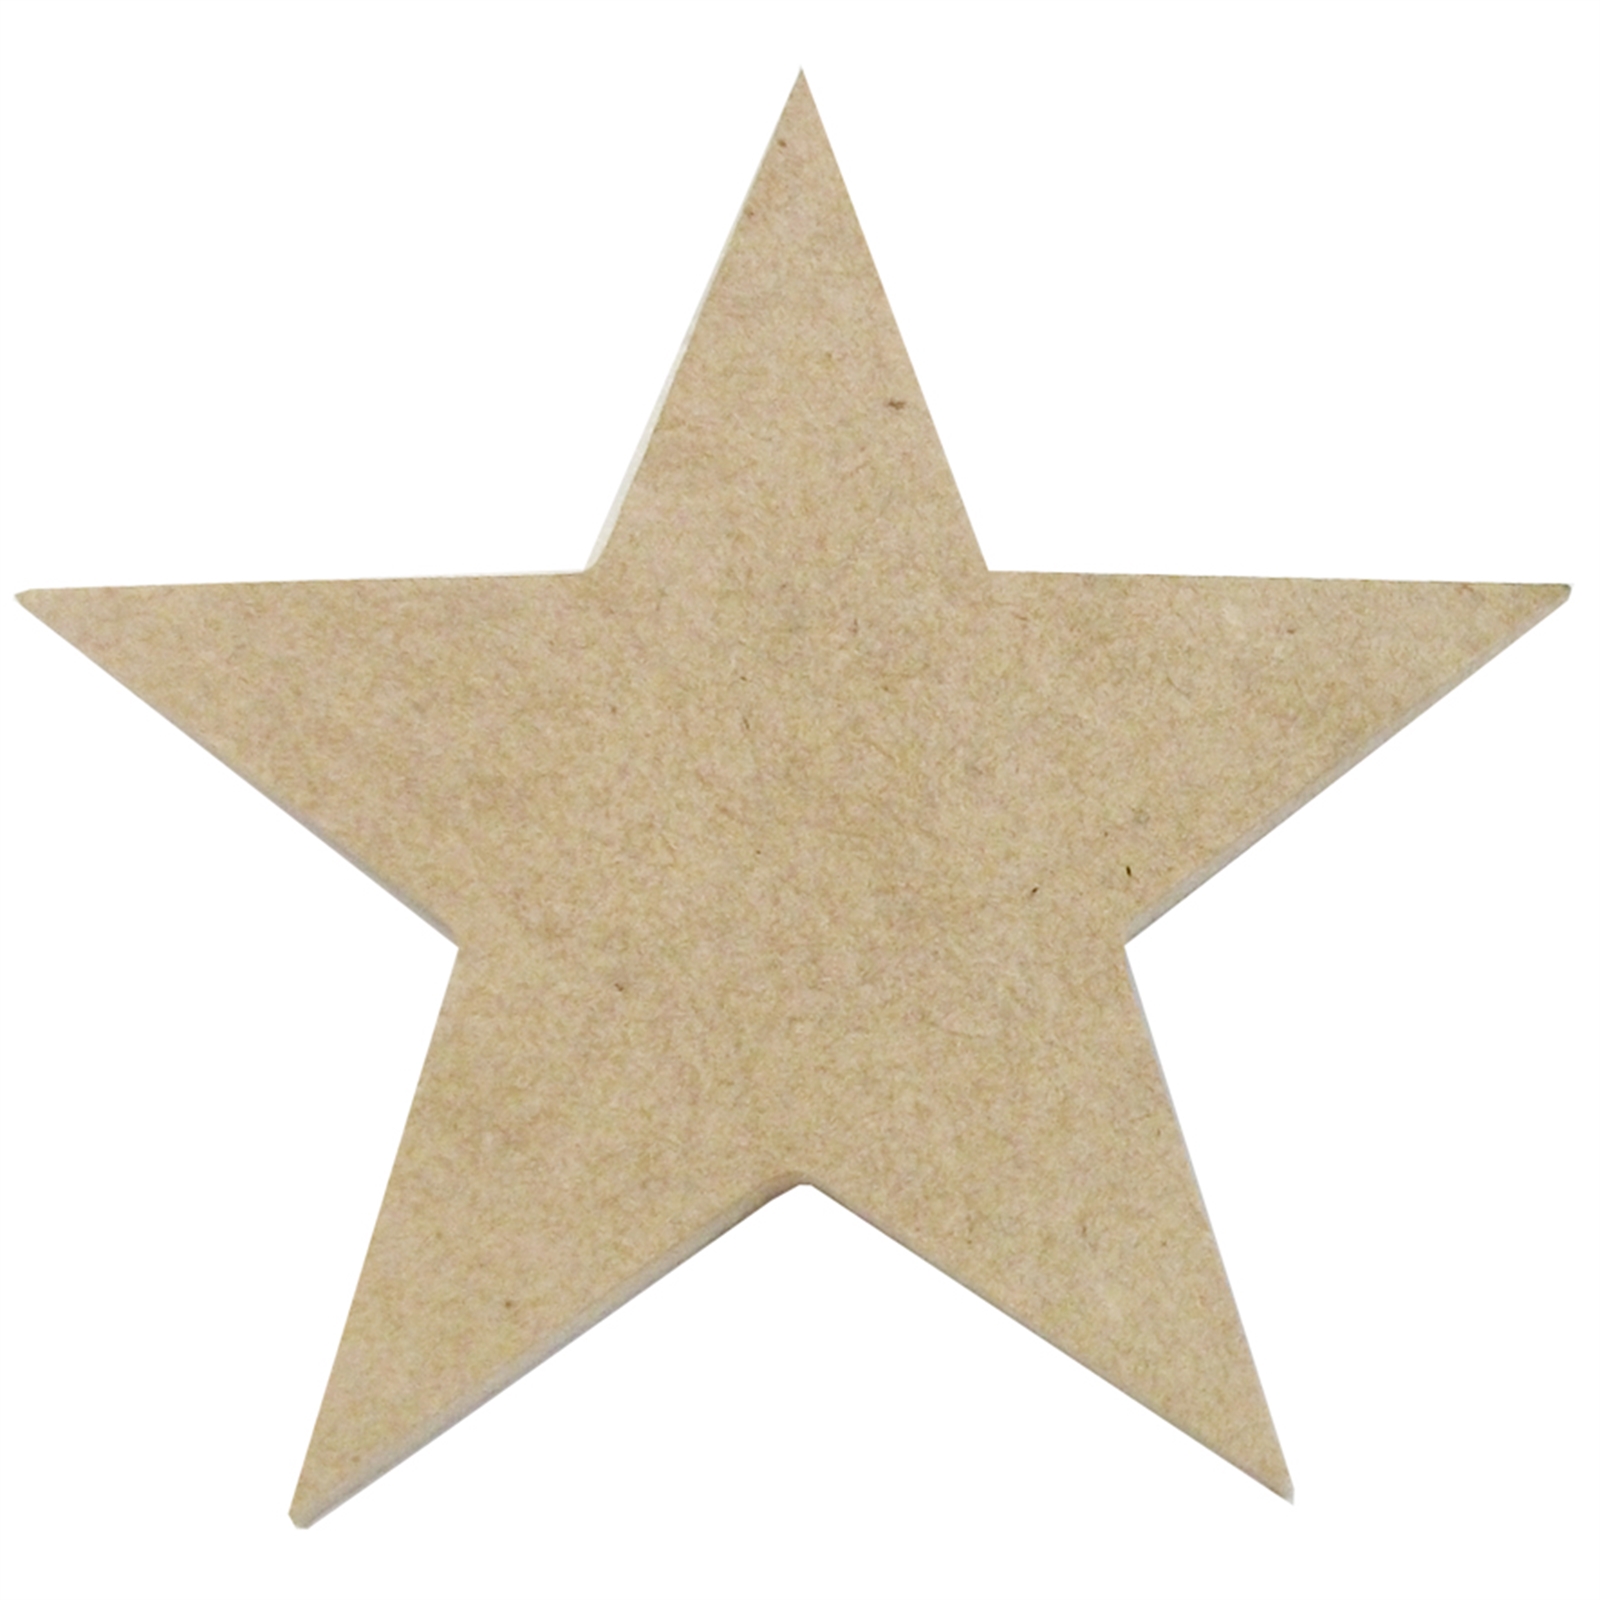 Boyle Large Craftwood Star